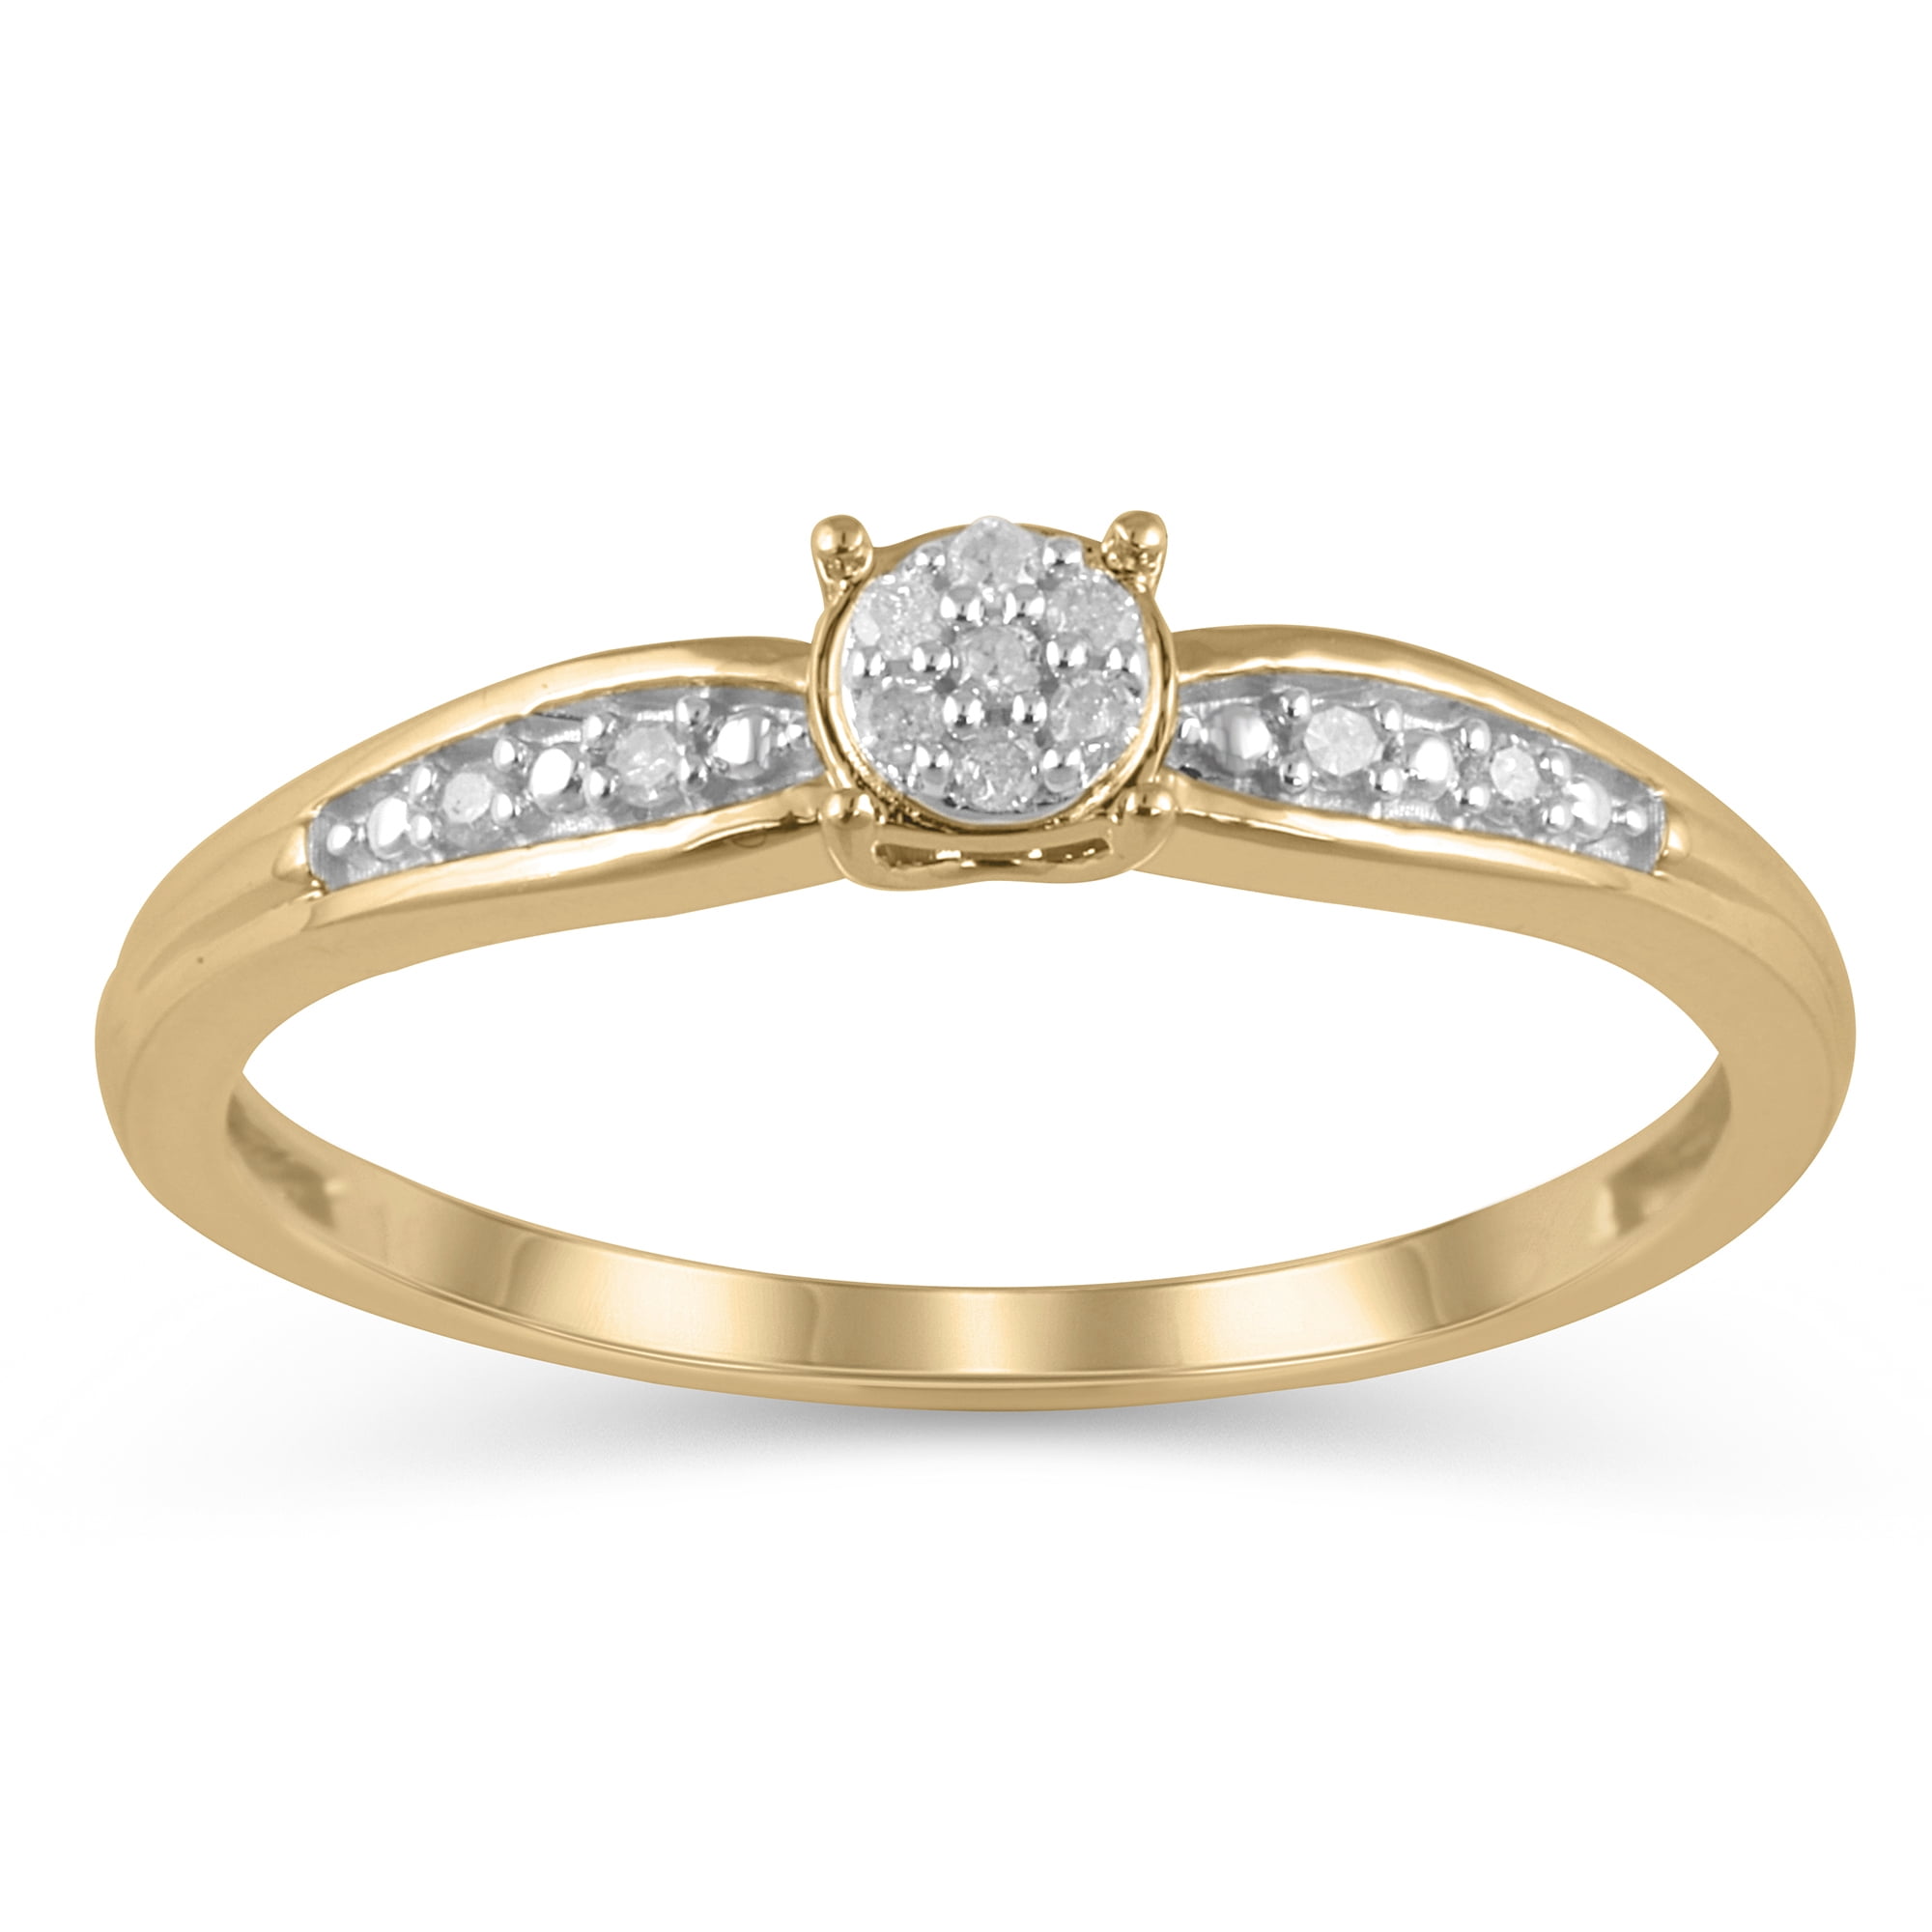 Hold My Hand 1/20 Carat T.W. JKI2I3 diamond promise ring in 10K